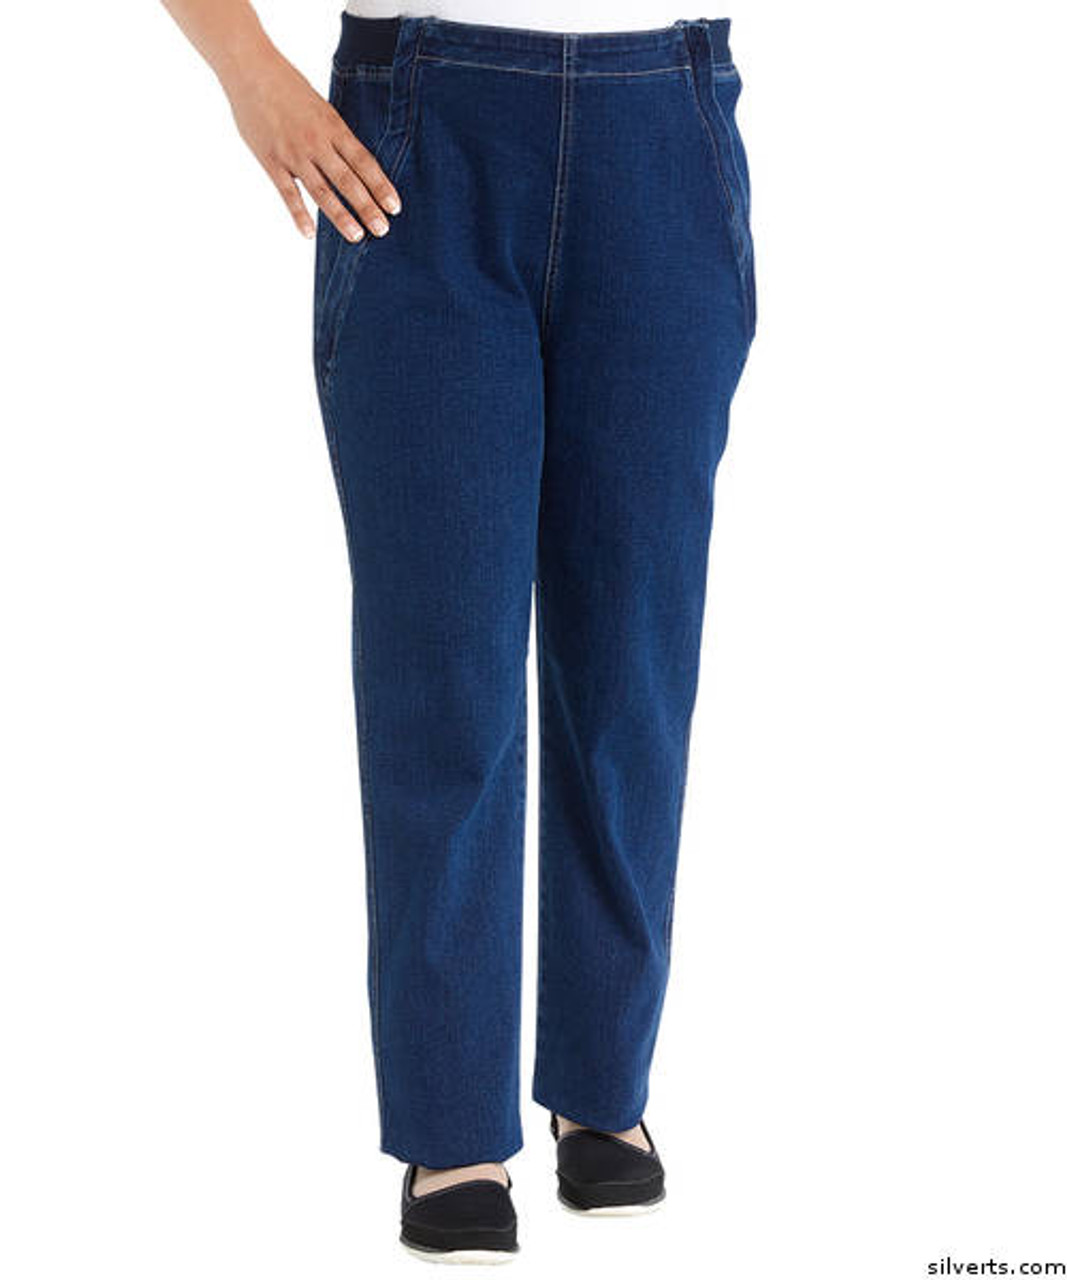 Silvert's 470130102 Womens Stylish Easy Dressing Zipper Front Jeans By Designer Izzy Camilleri , Size Medium, DENIM